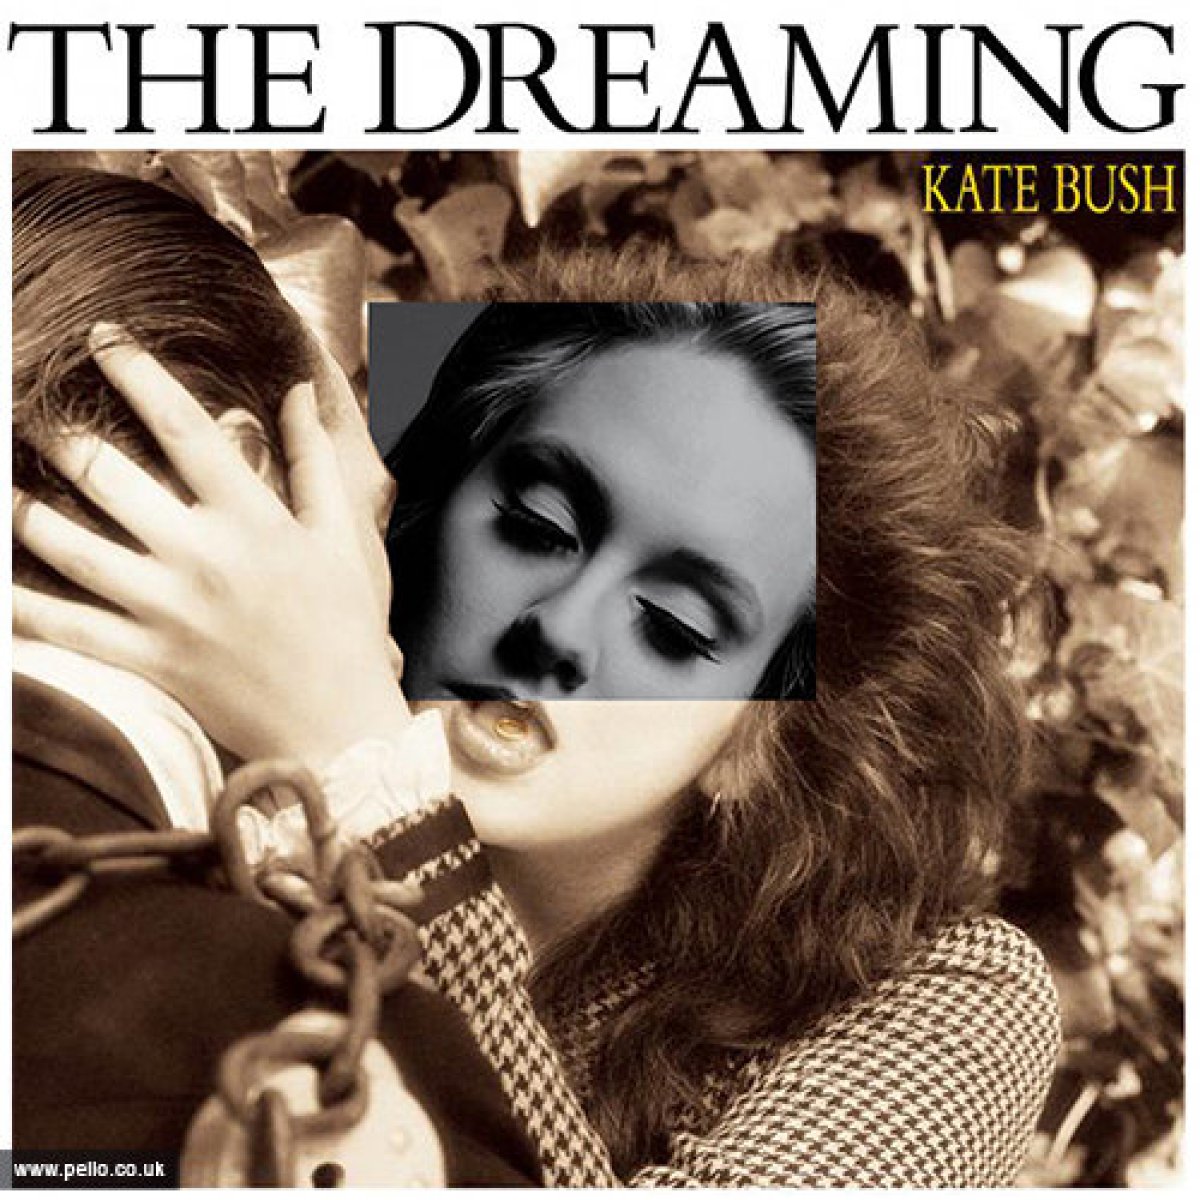 The Dreaming (Kate Bush)